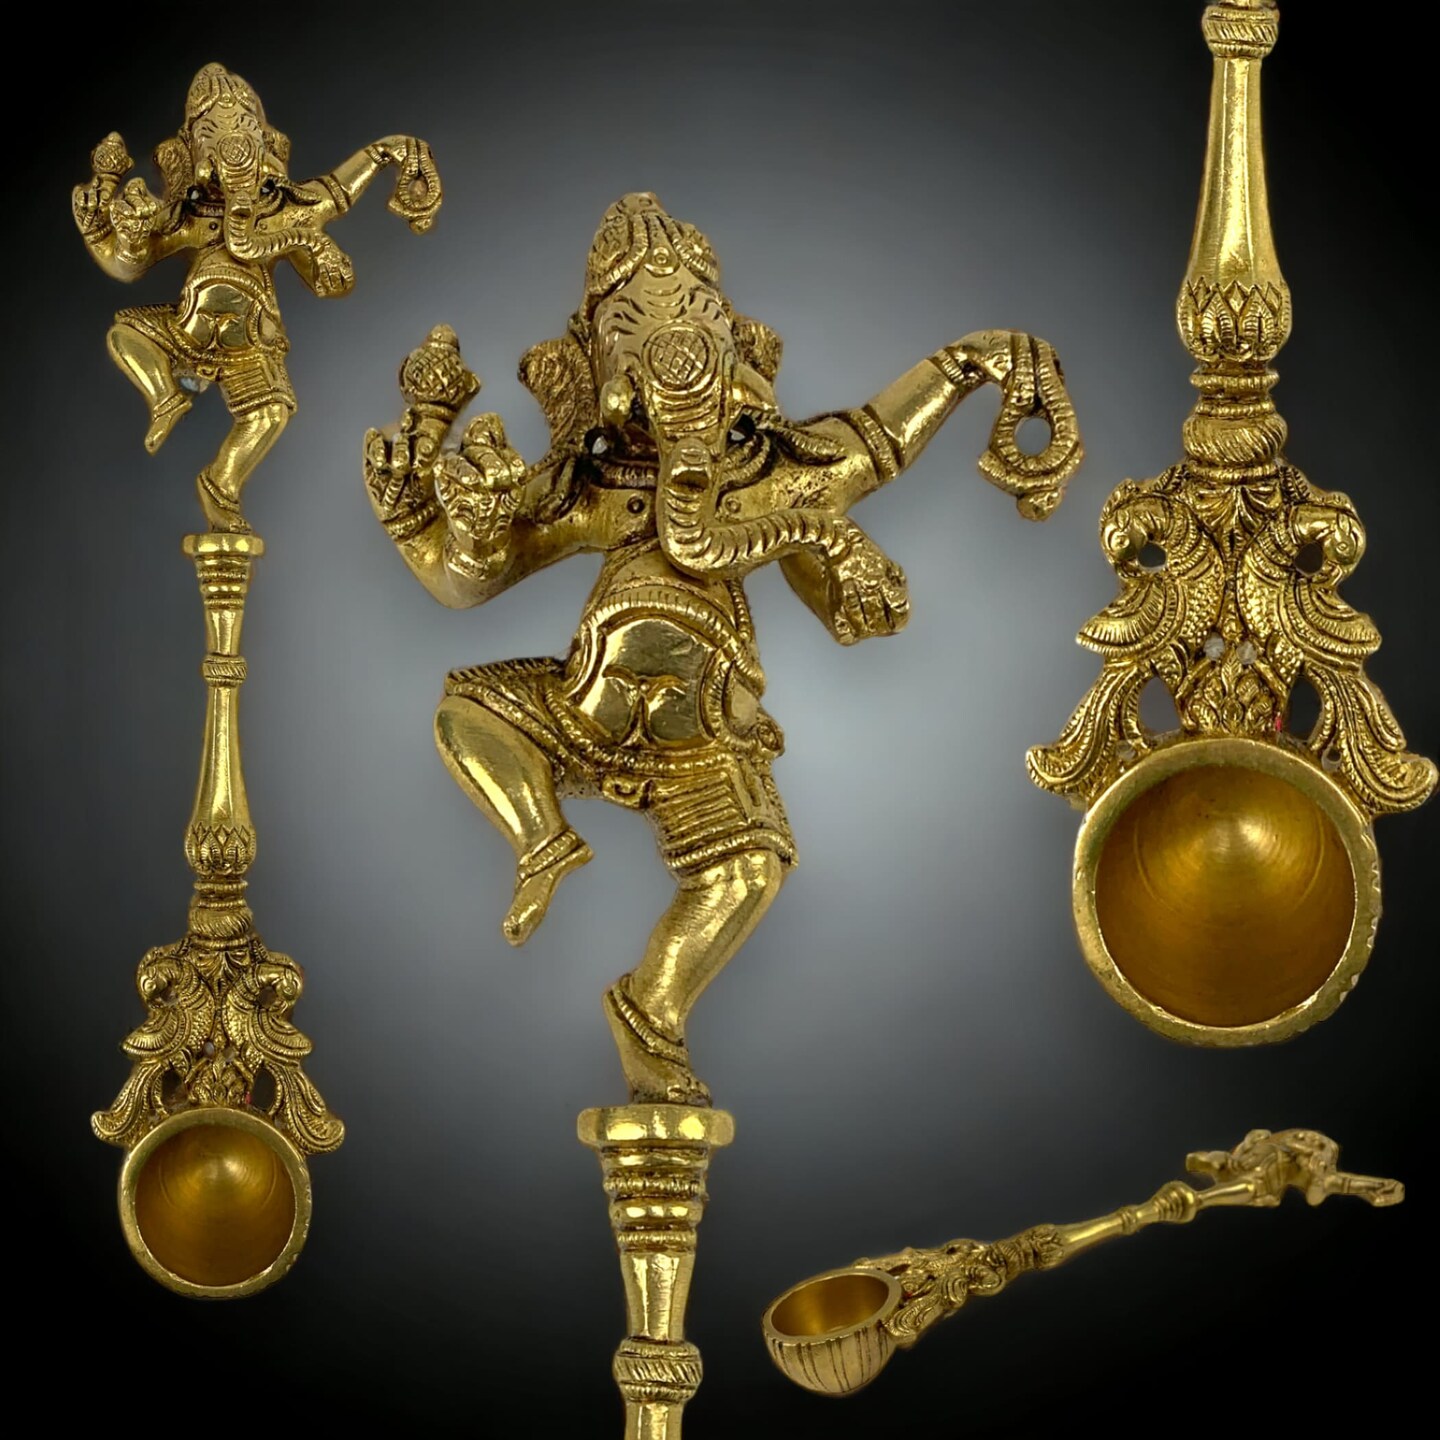 Decorative Brass Dancing Ganesha/krishna Spoon Yagya Hawan Spoon Indian Cultural Religious Item Brass Ganesha/krishna Wall Hanging Diwali Gift Best Home Temple Decor